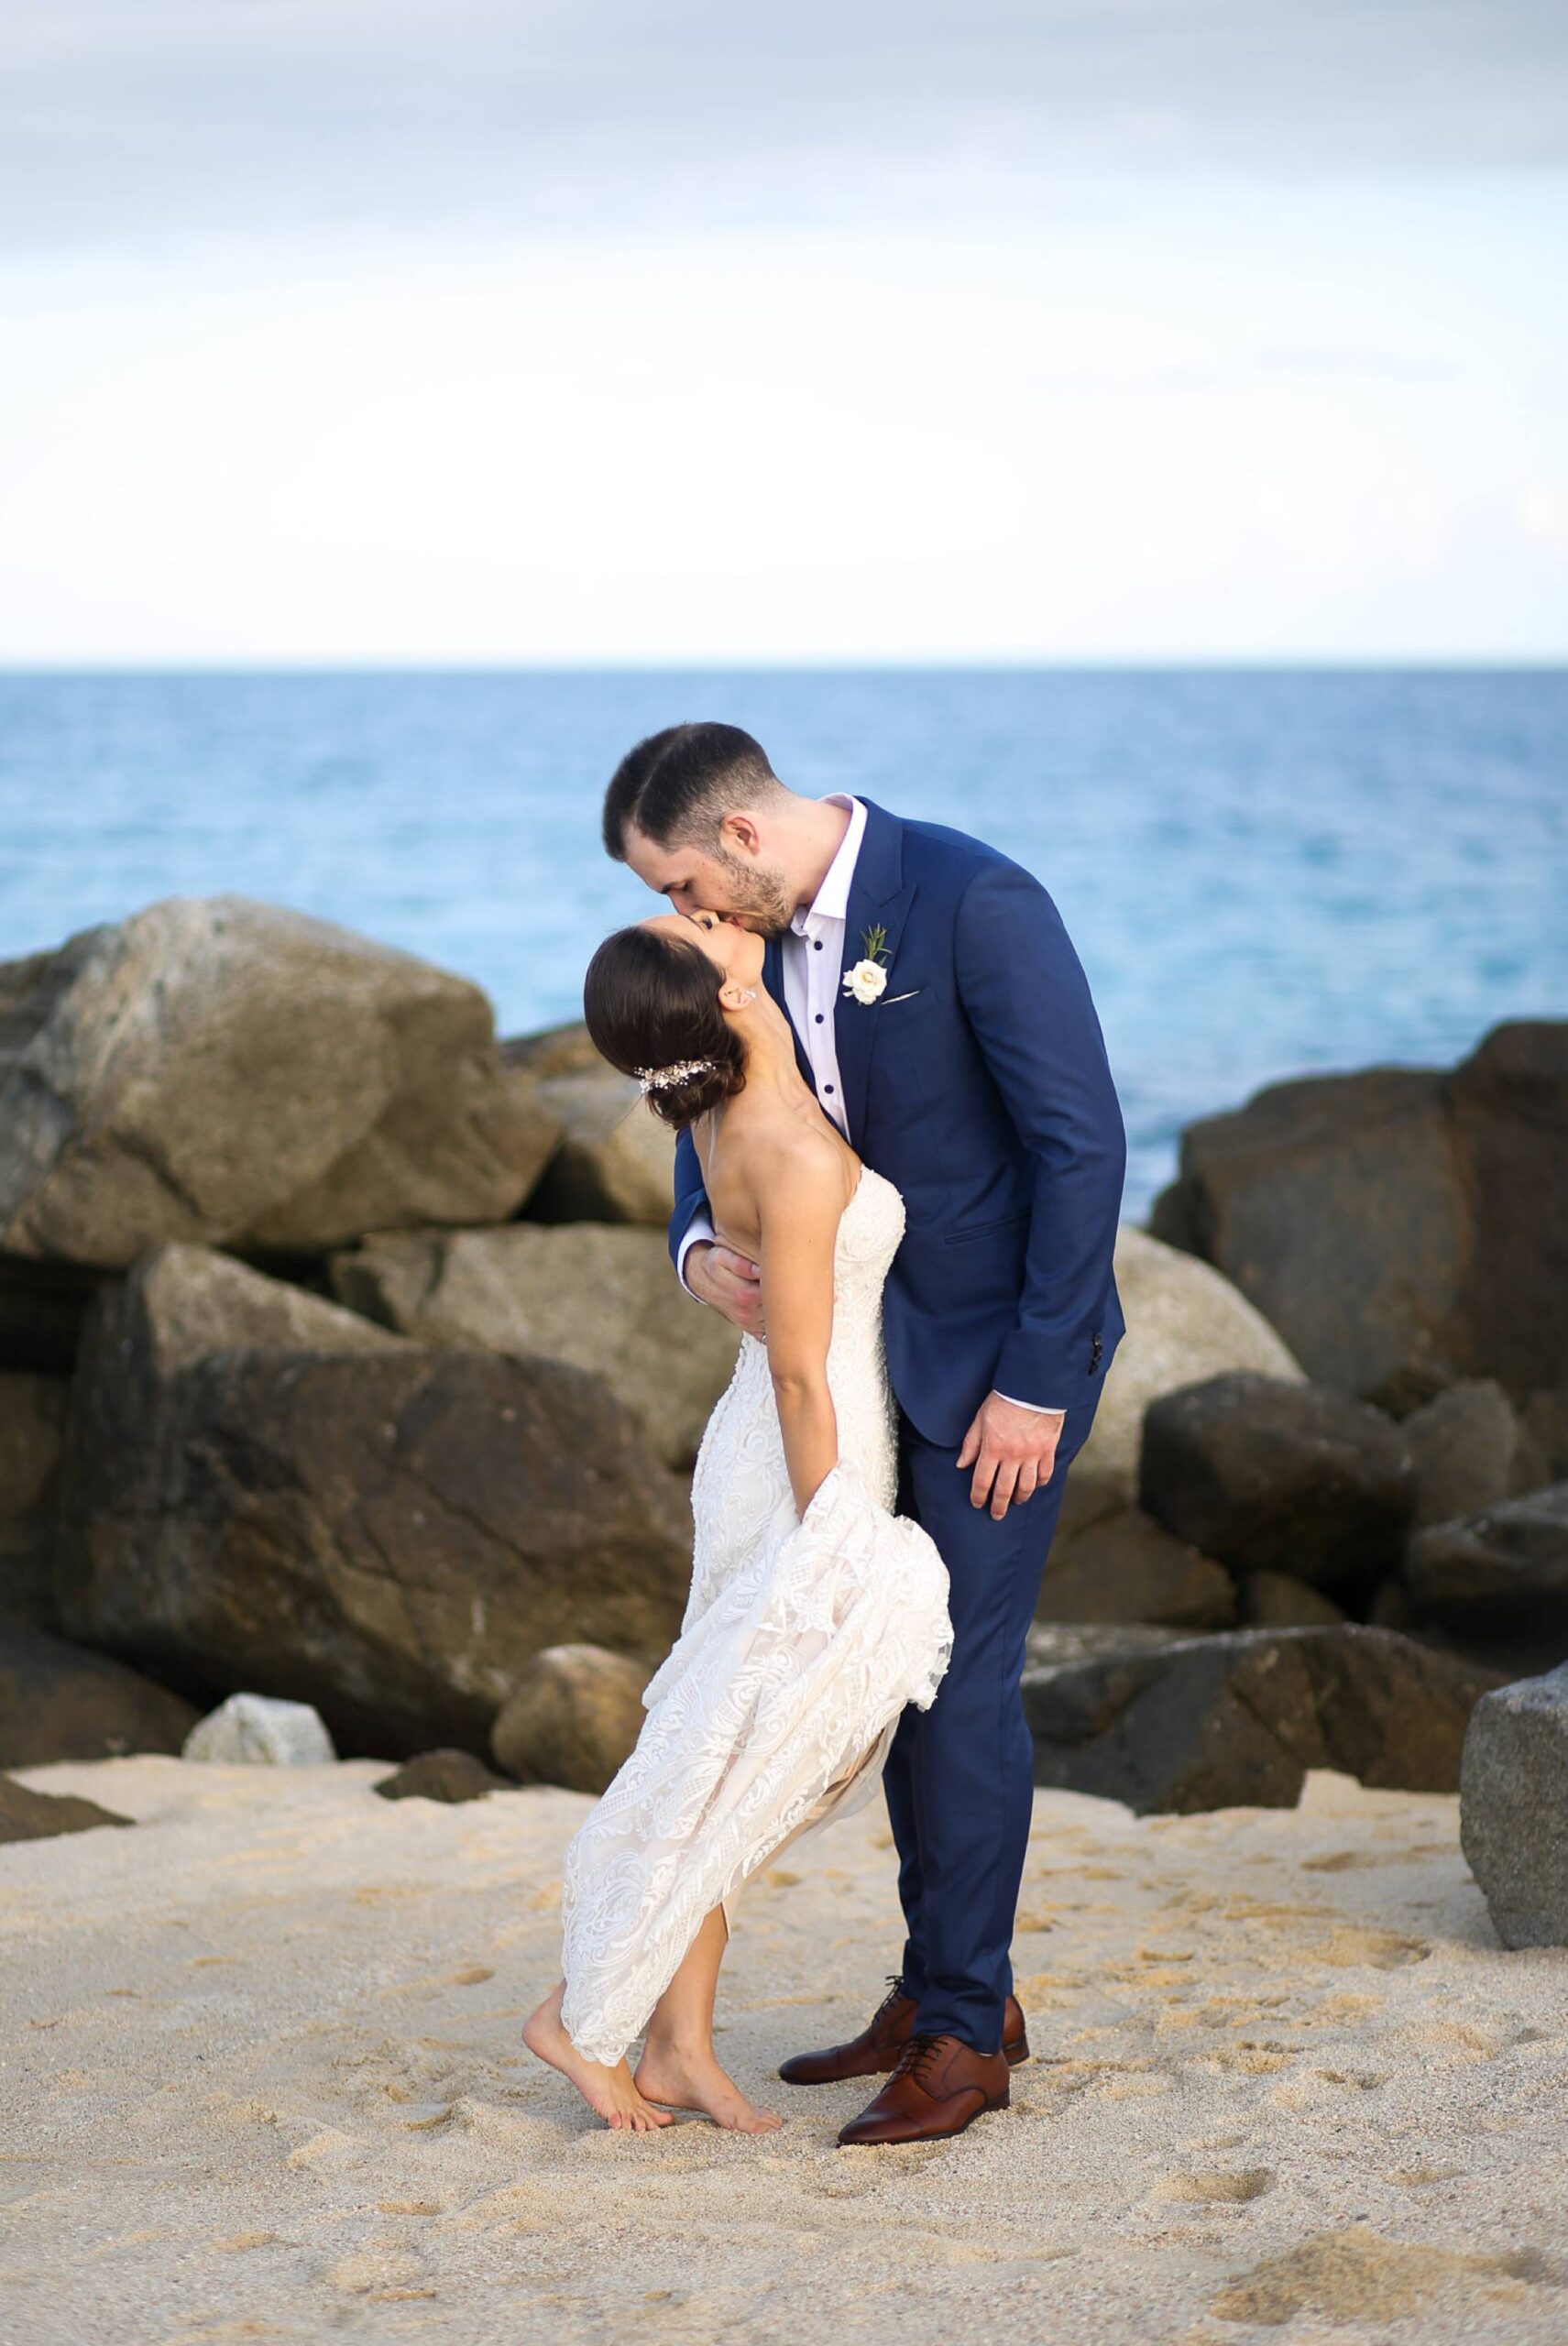 Wedding day kiss on beach